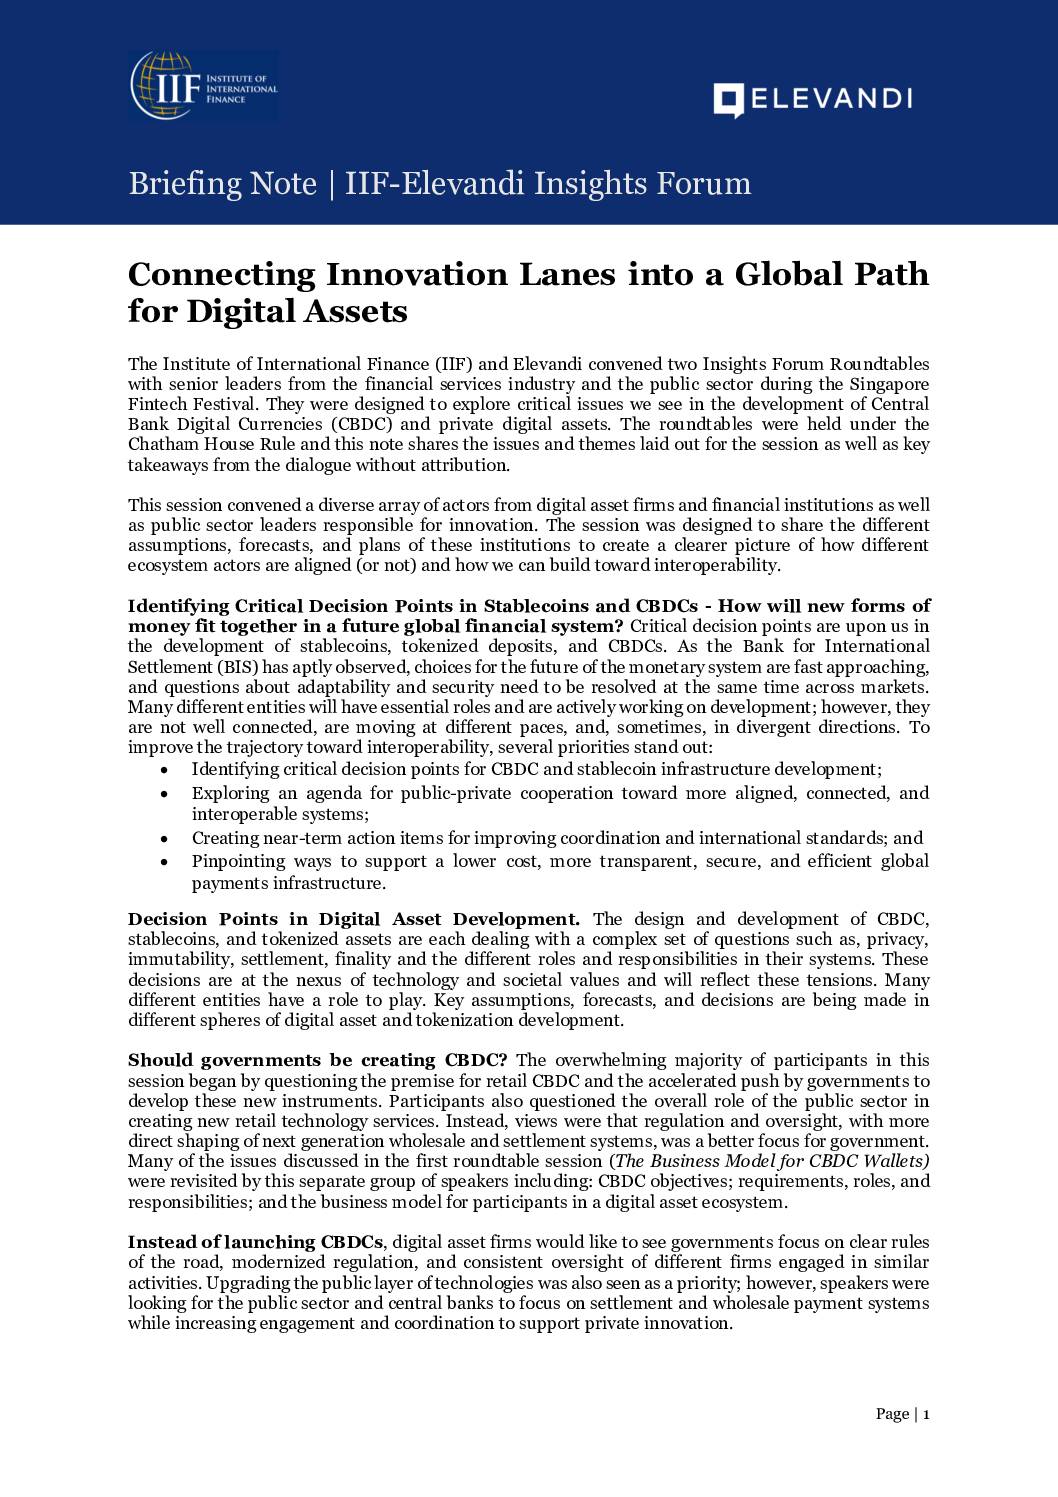 Institute-of-International-Finance-Connecting-Innovation-Lanes-for-Digital-Assets-pdf